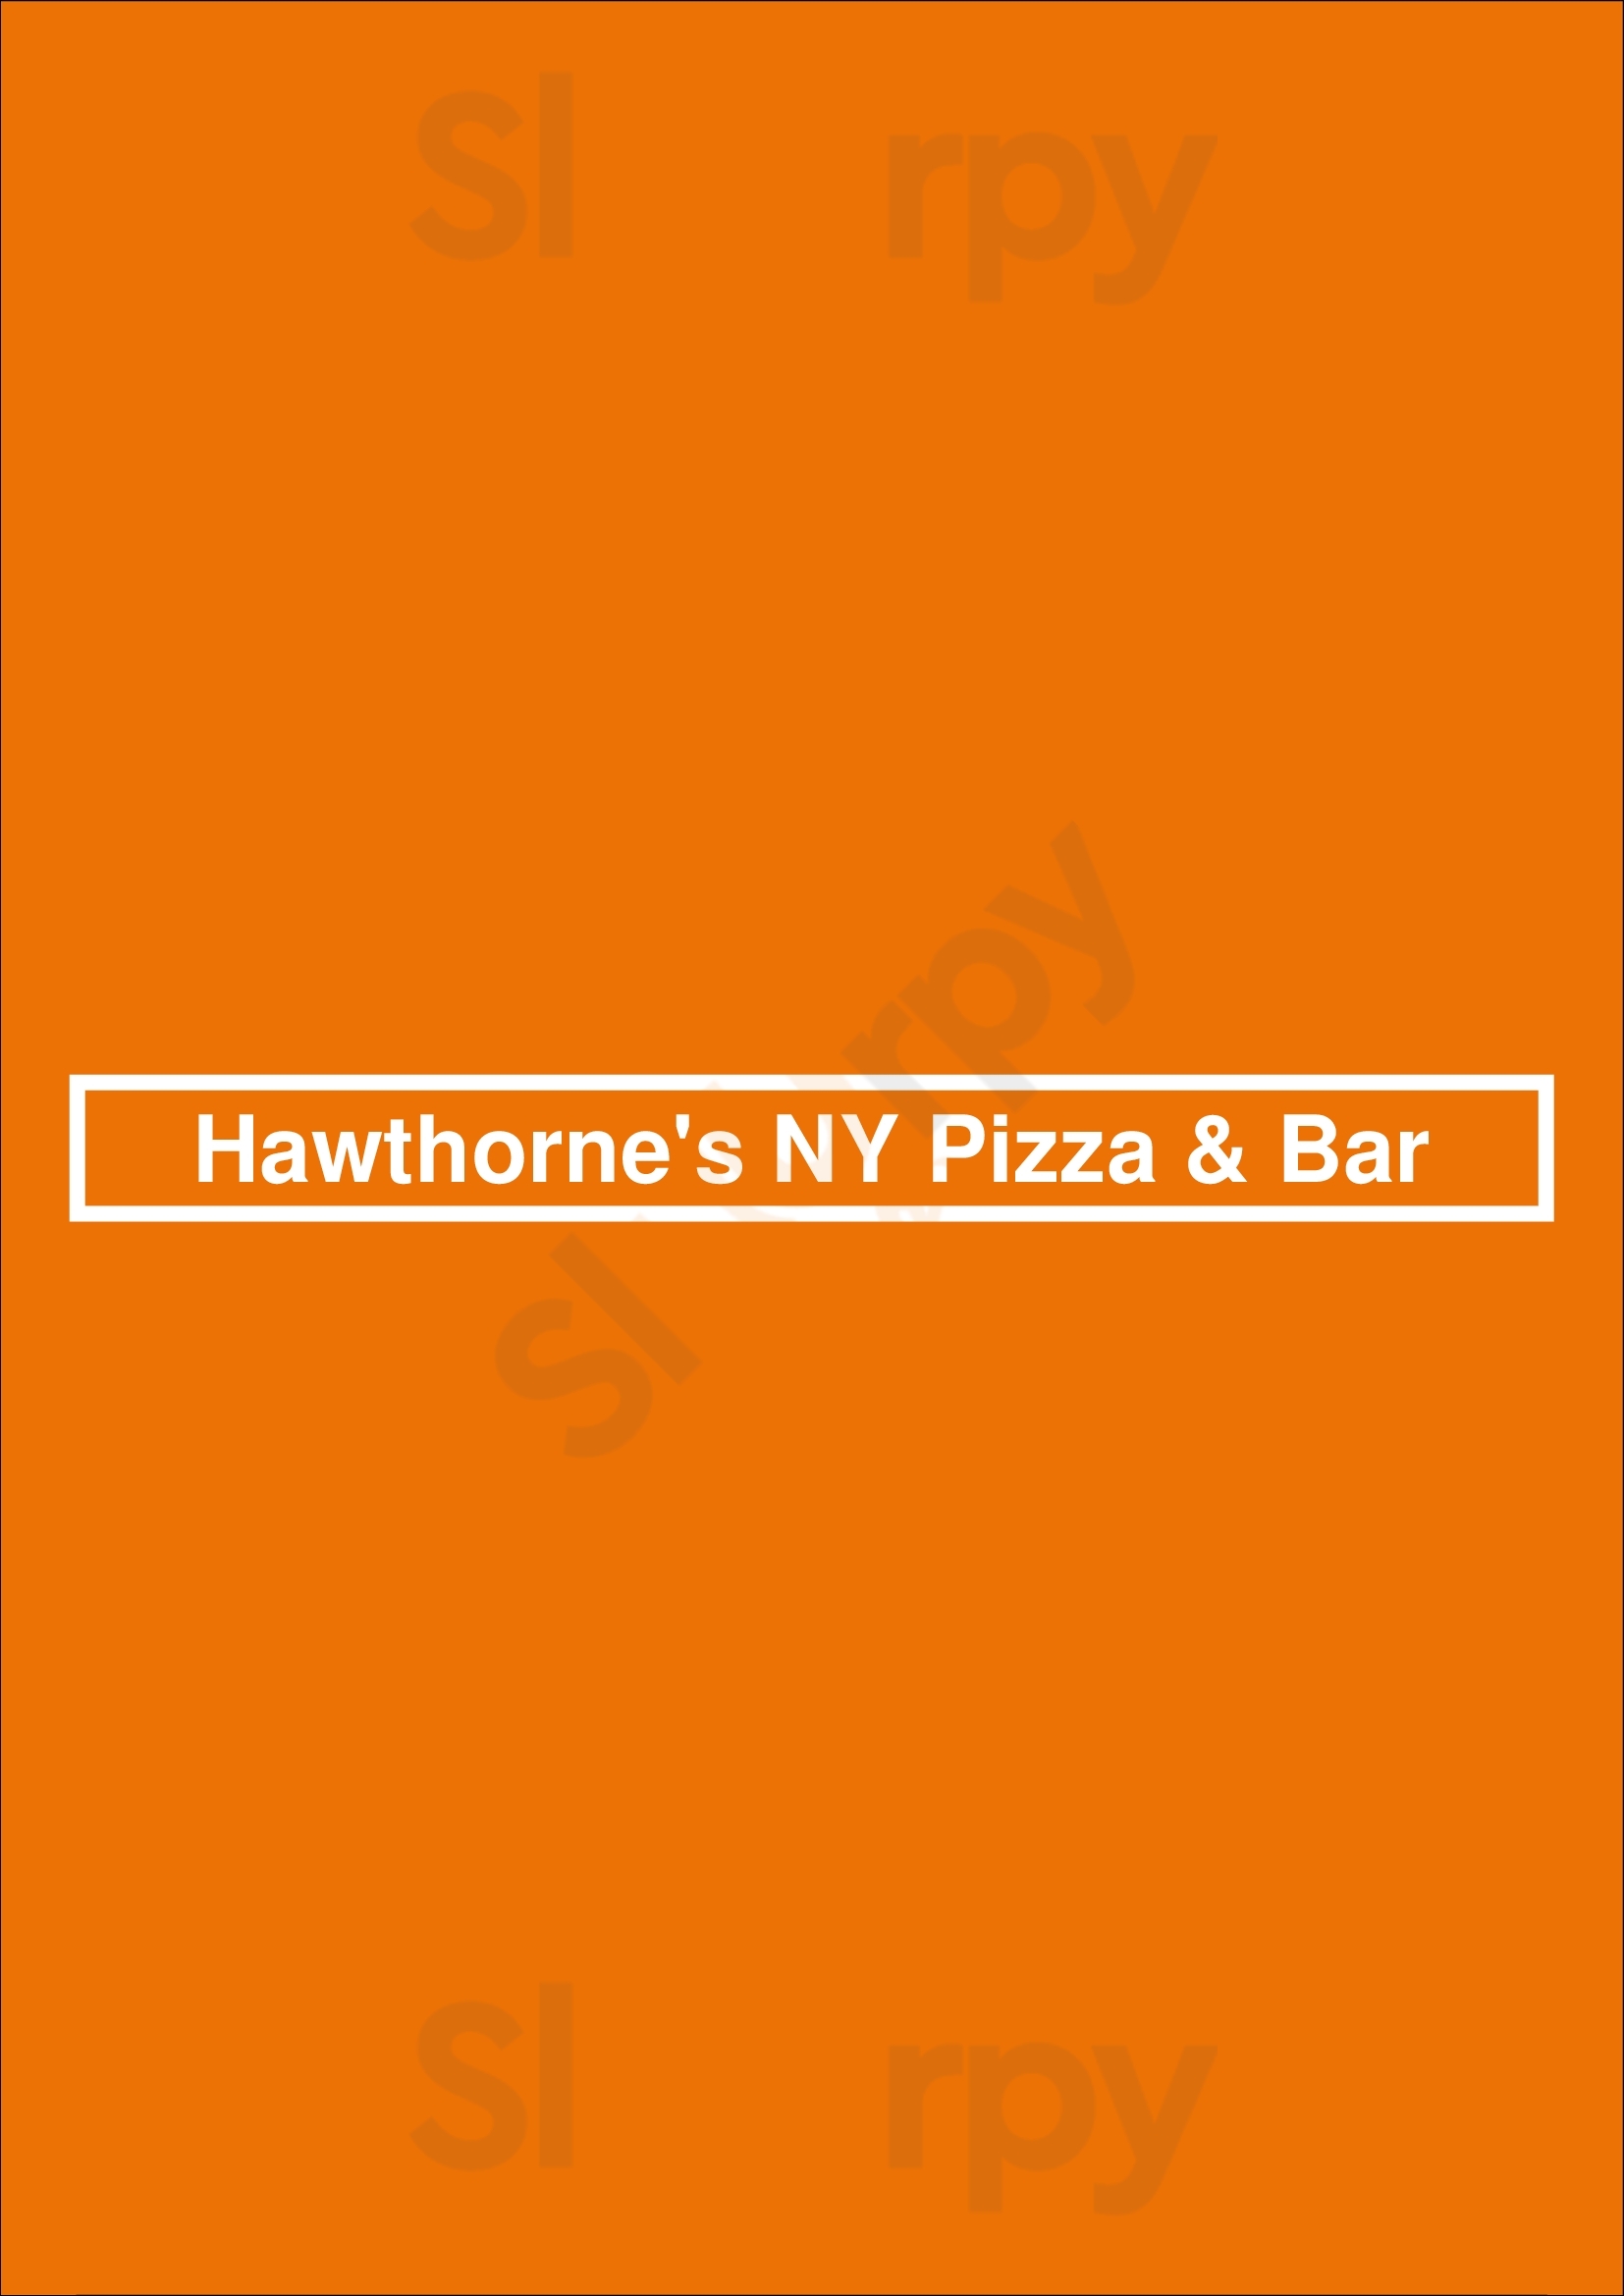 Hawthorne's Ny Pizza & Bar Charlotte Menu - 1